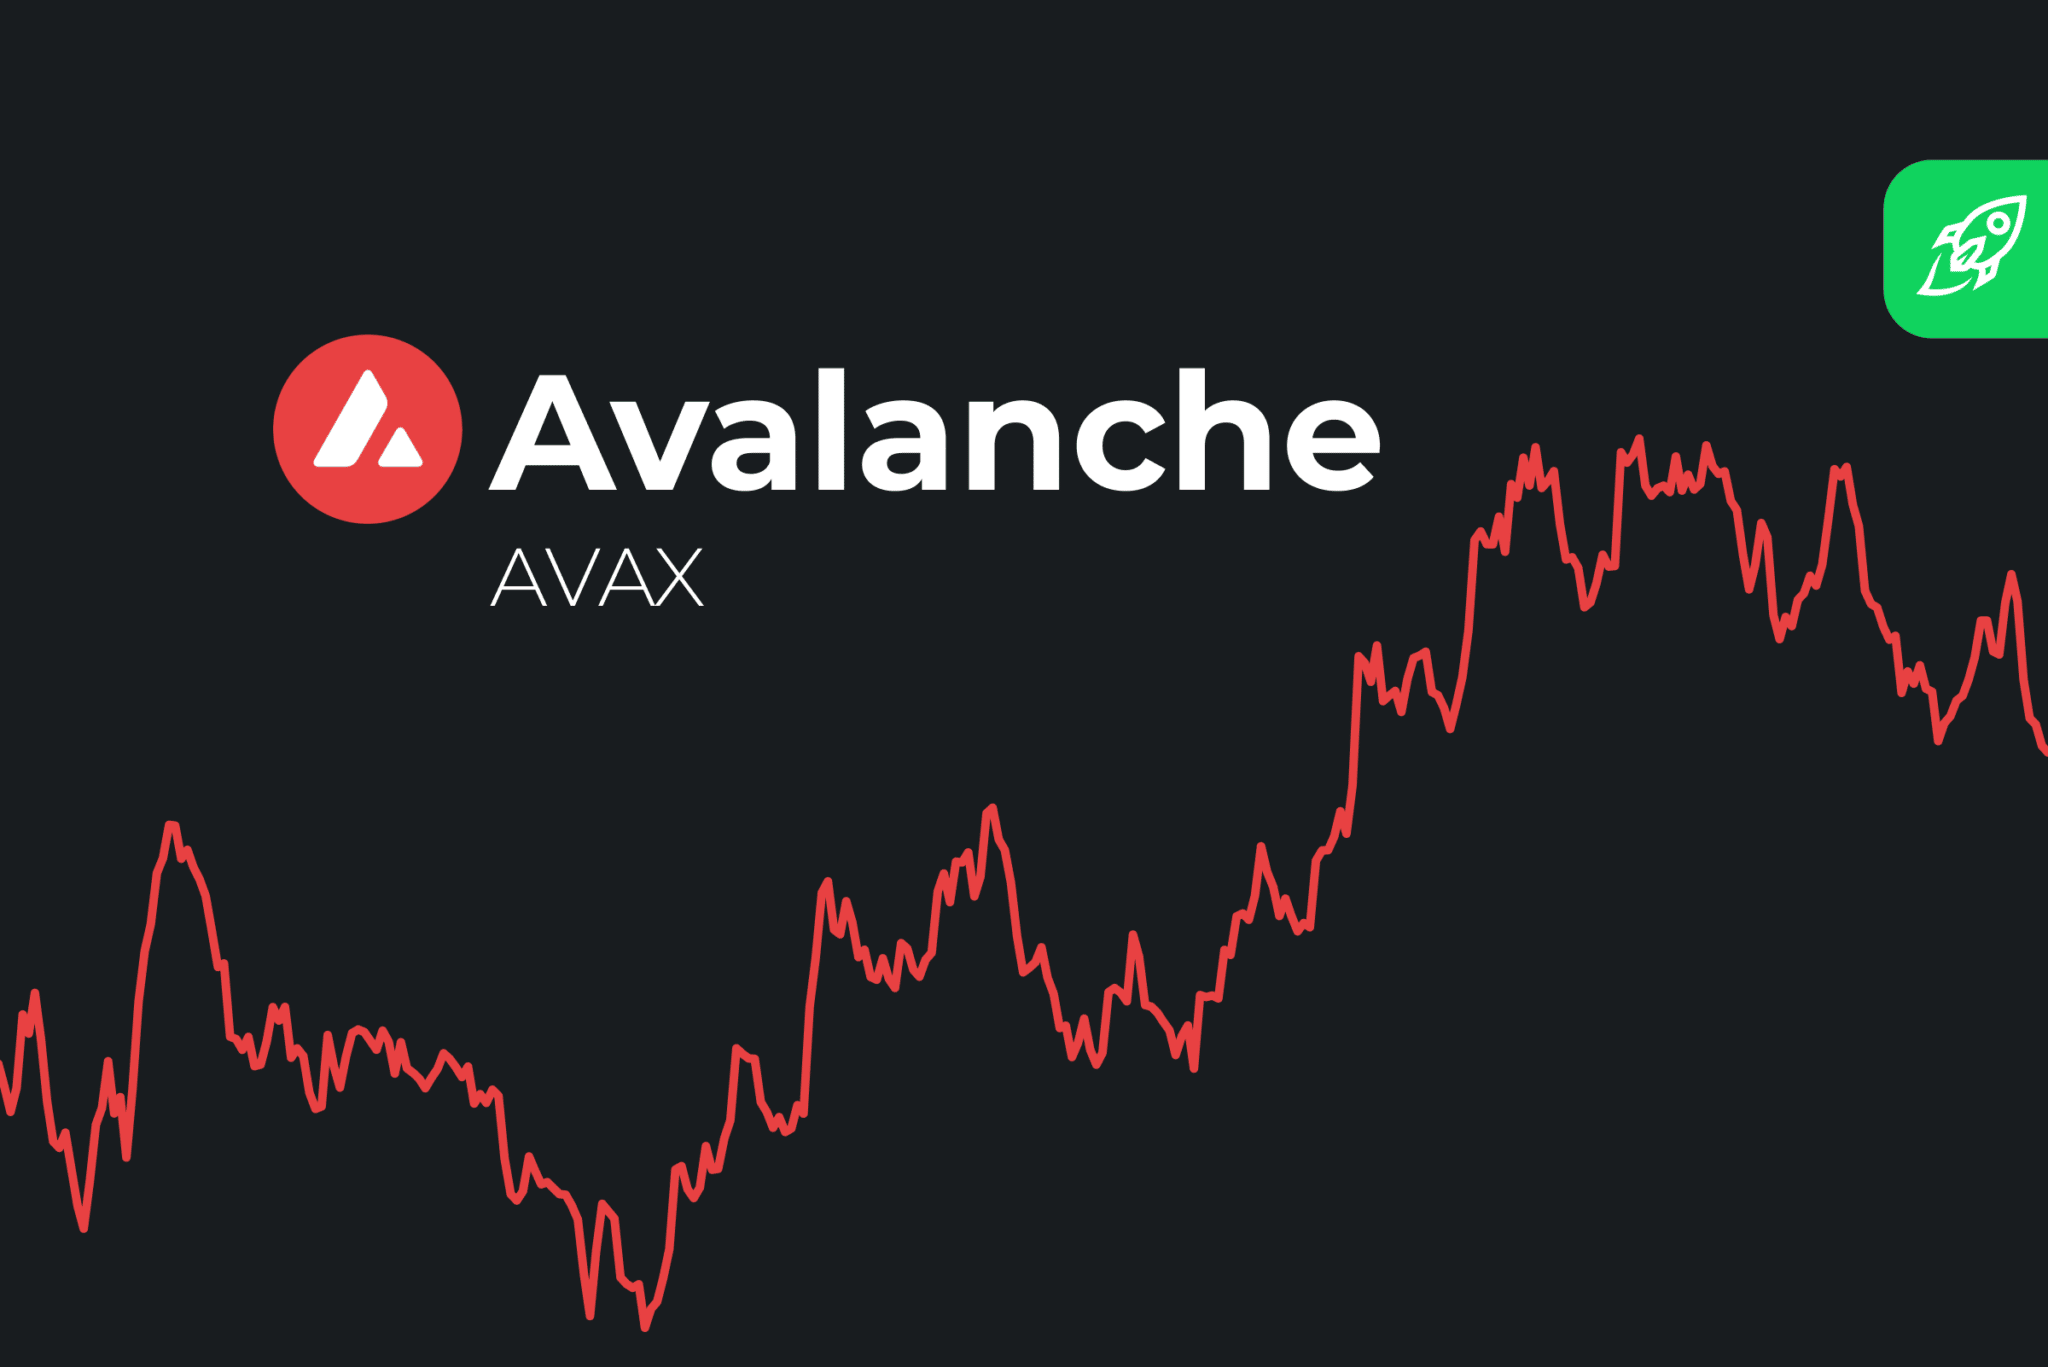 Avalanche (AVAX) Price Prediction for 2022, 2023, 2024 2025 2031